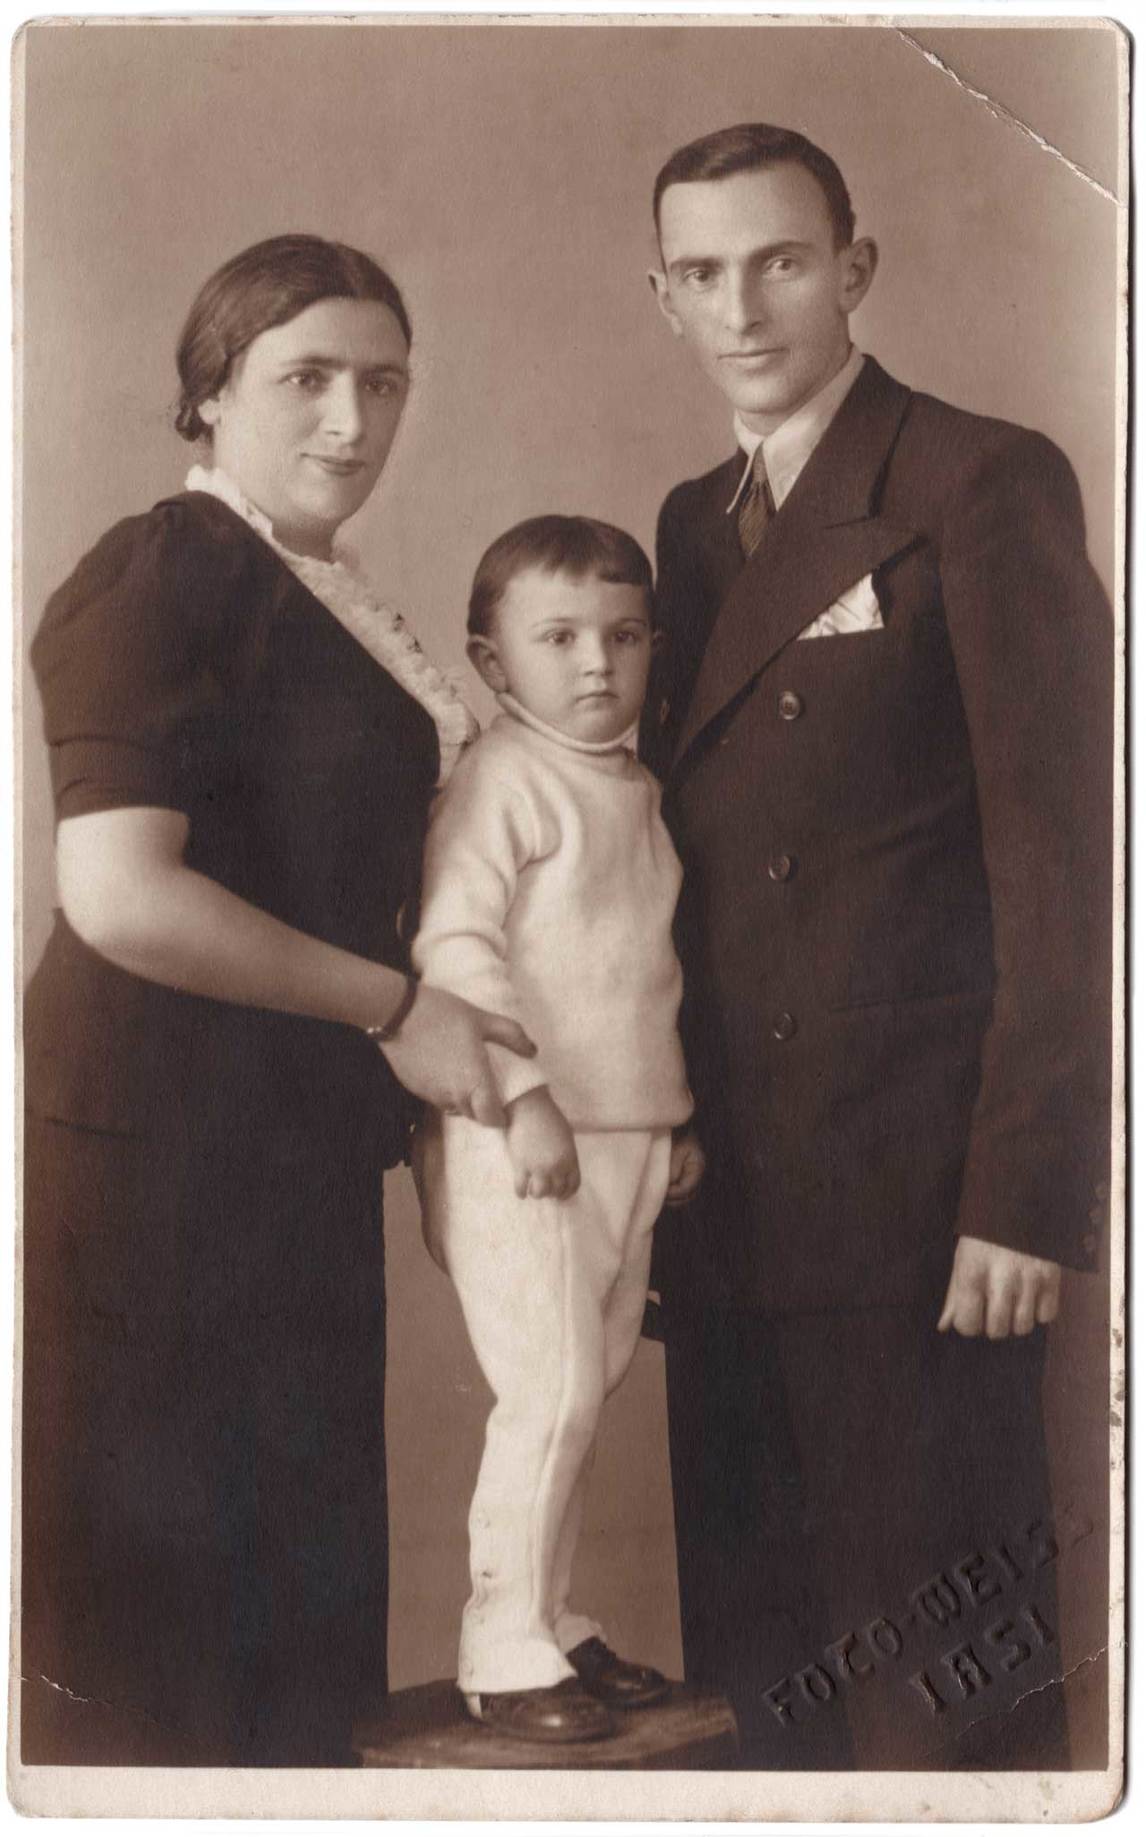 Sorel with parents Tony and Moriţ, c.1936